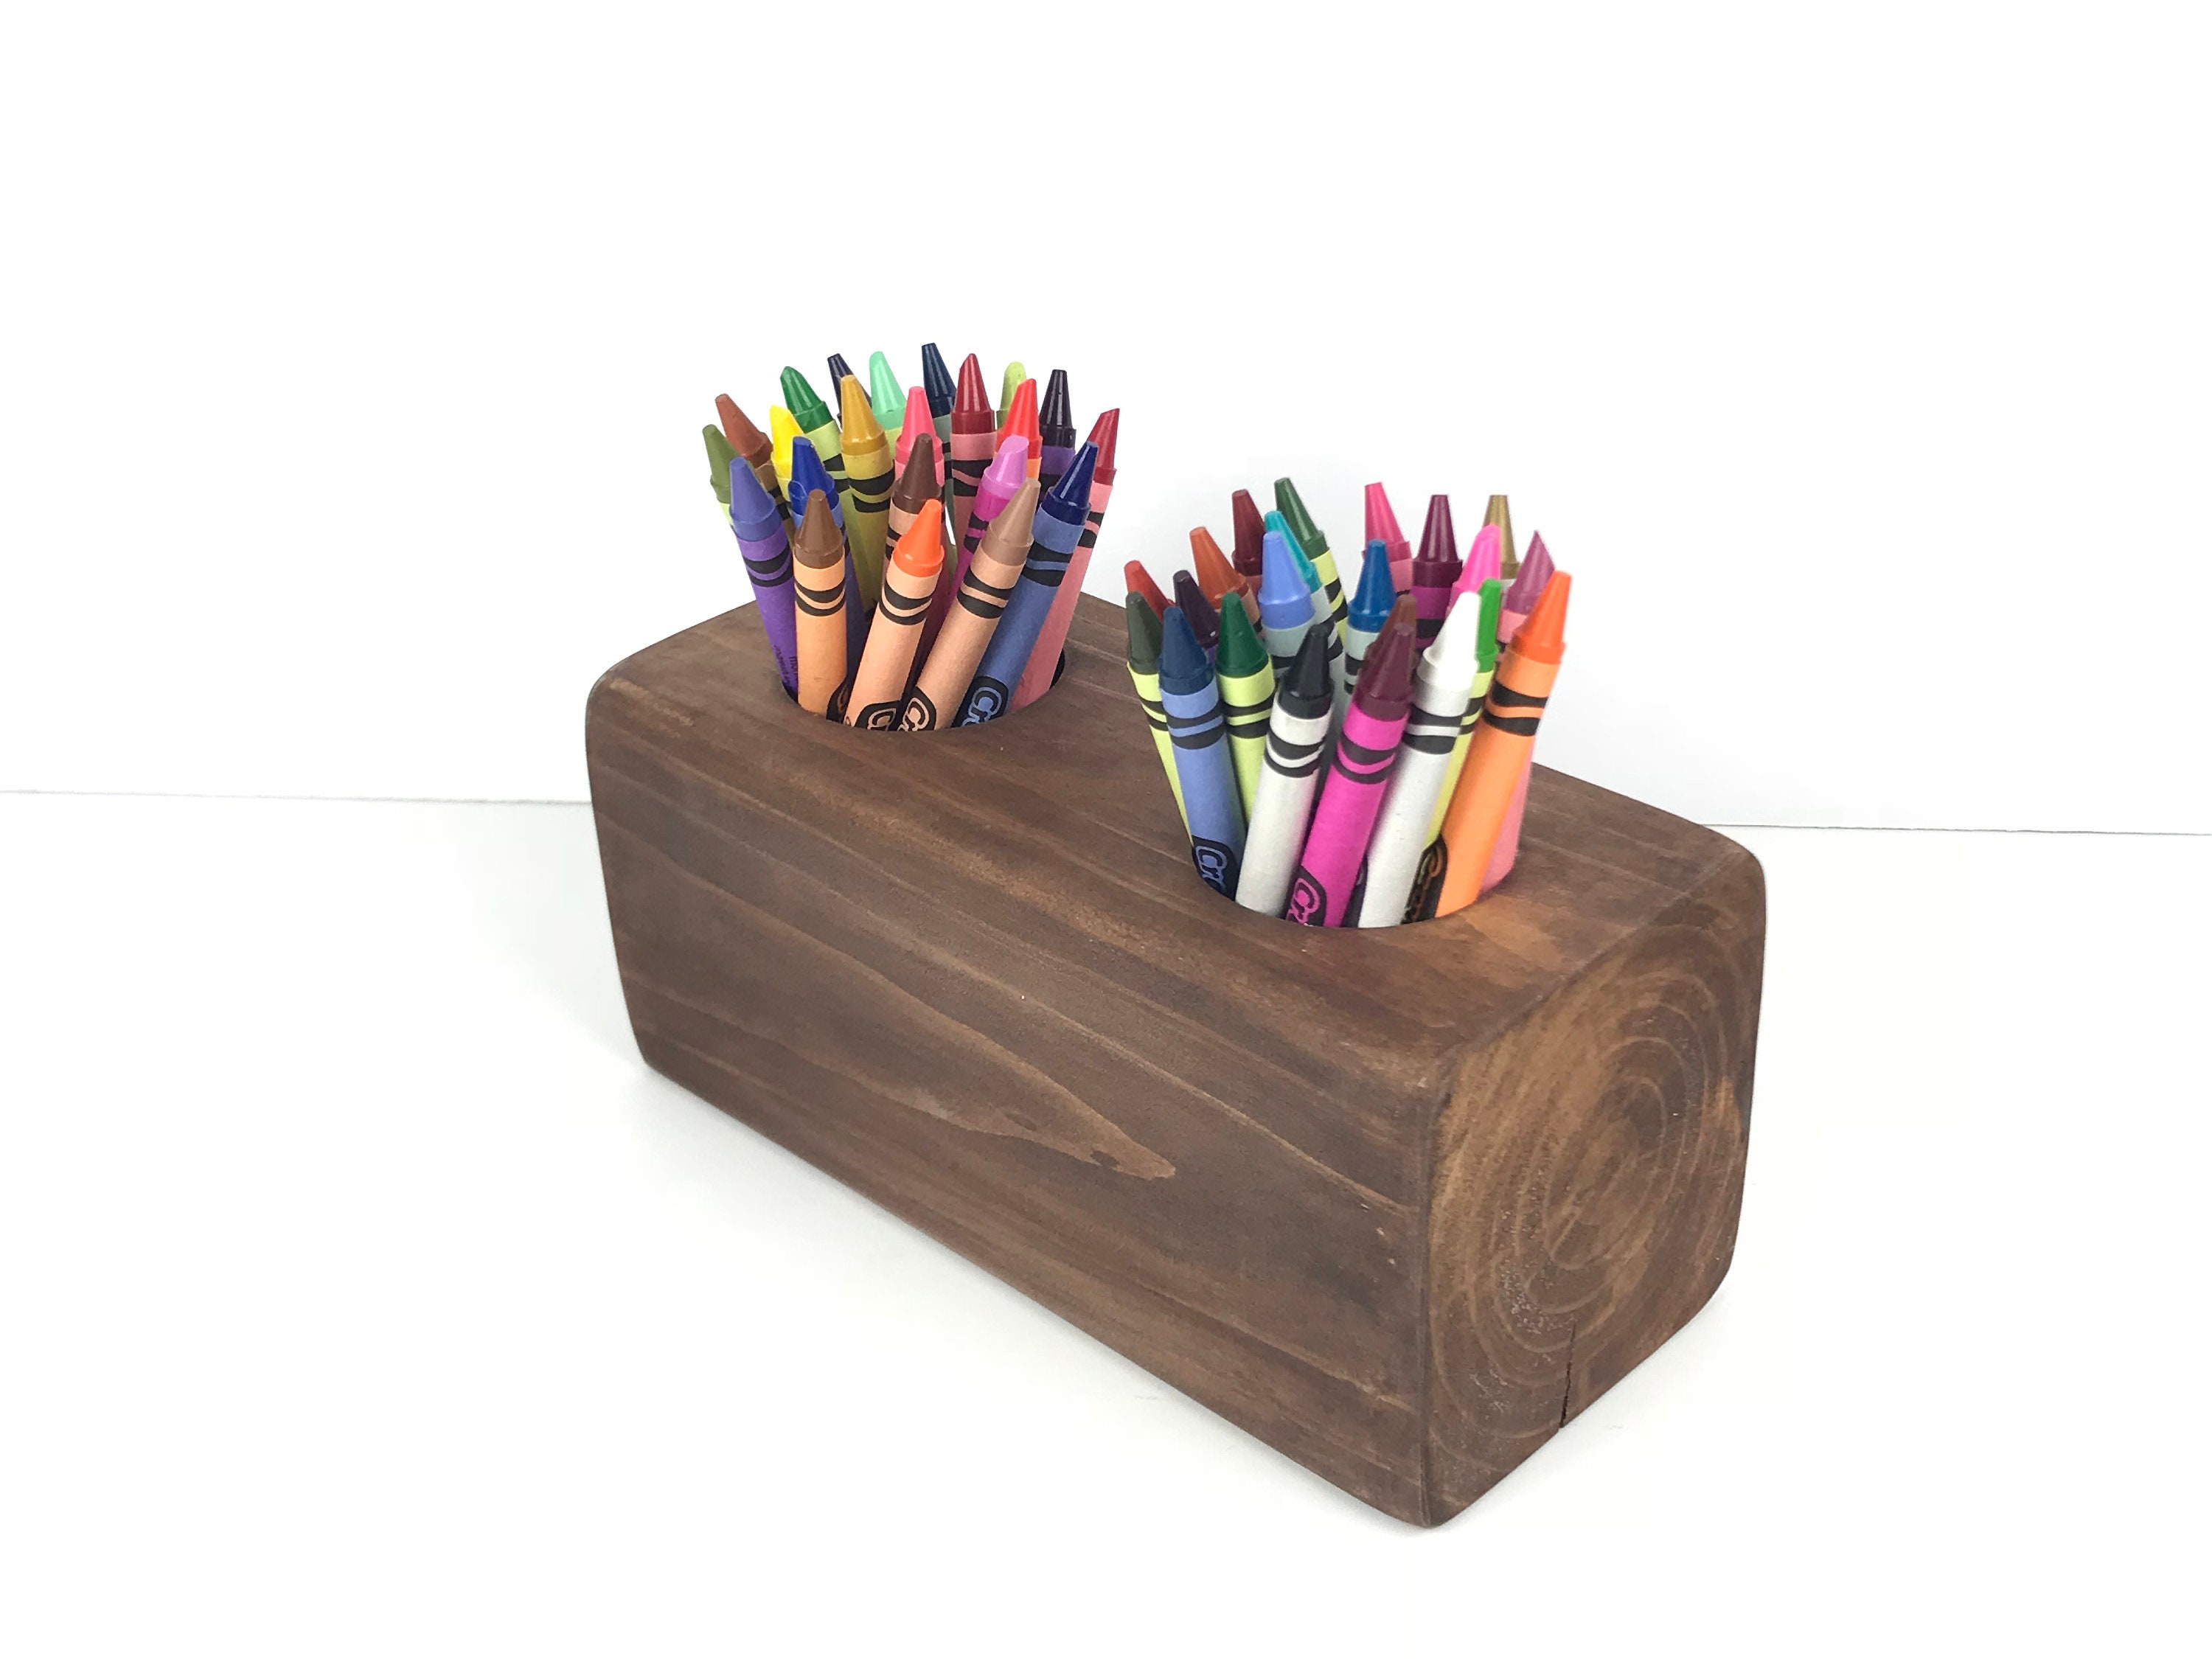 Organizing crayons  Crayon organization, Crayon storage, Playroom